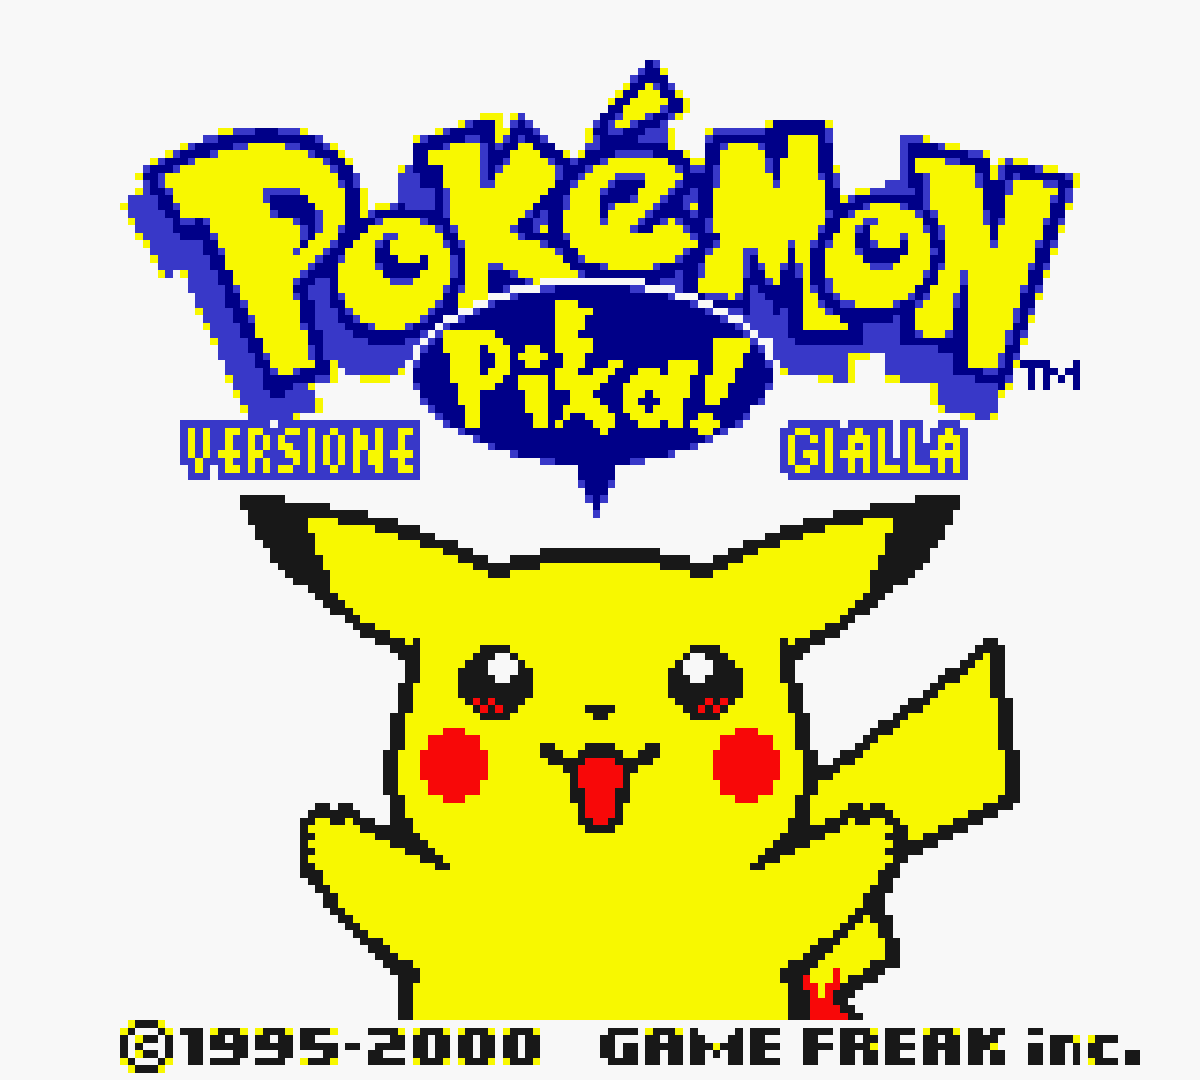 TGDB - Browse - Game - Pokémon Yellow Version: Special Pikachu Edition